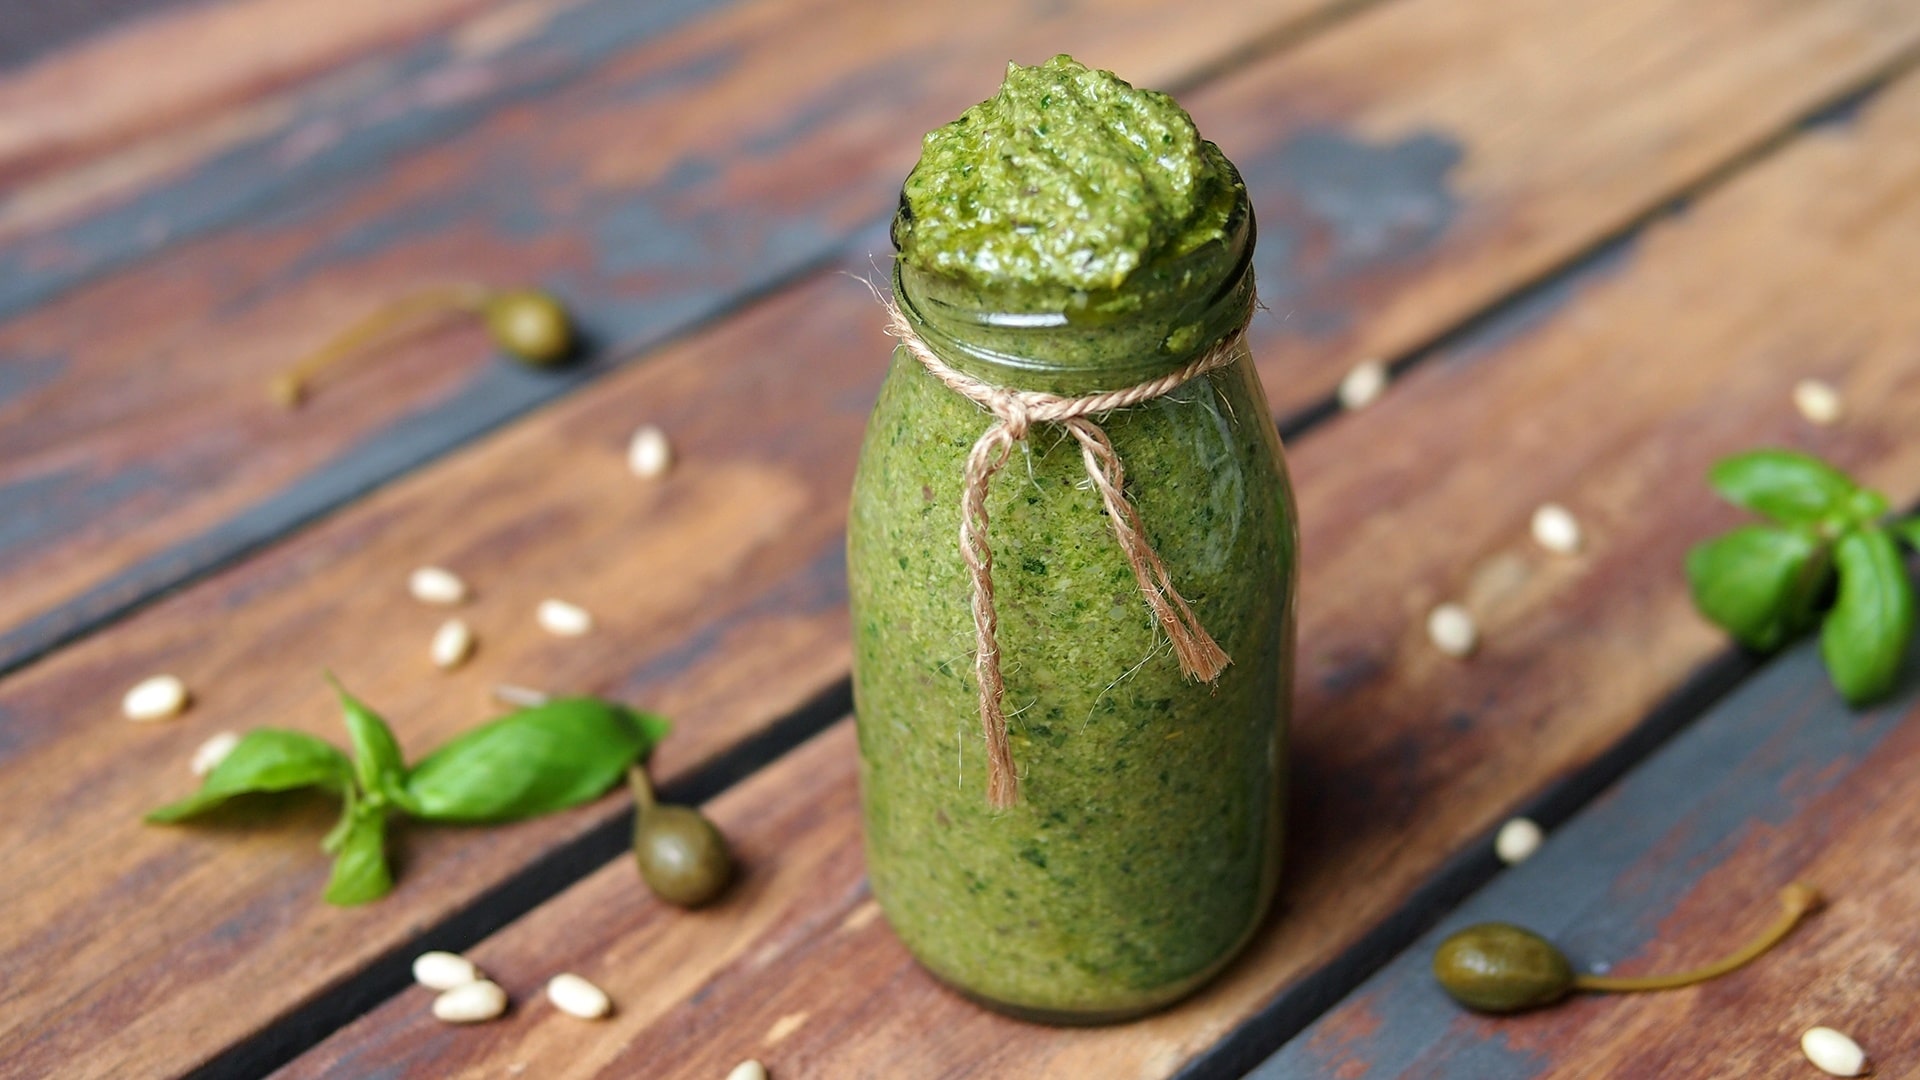 Picture of green vegan pesto in a glass jar